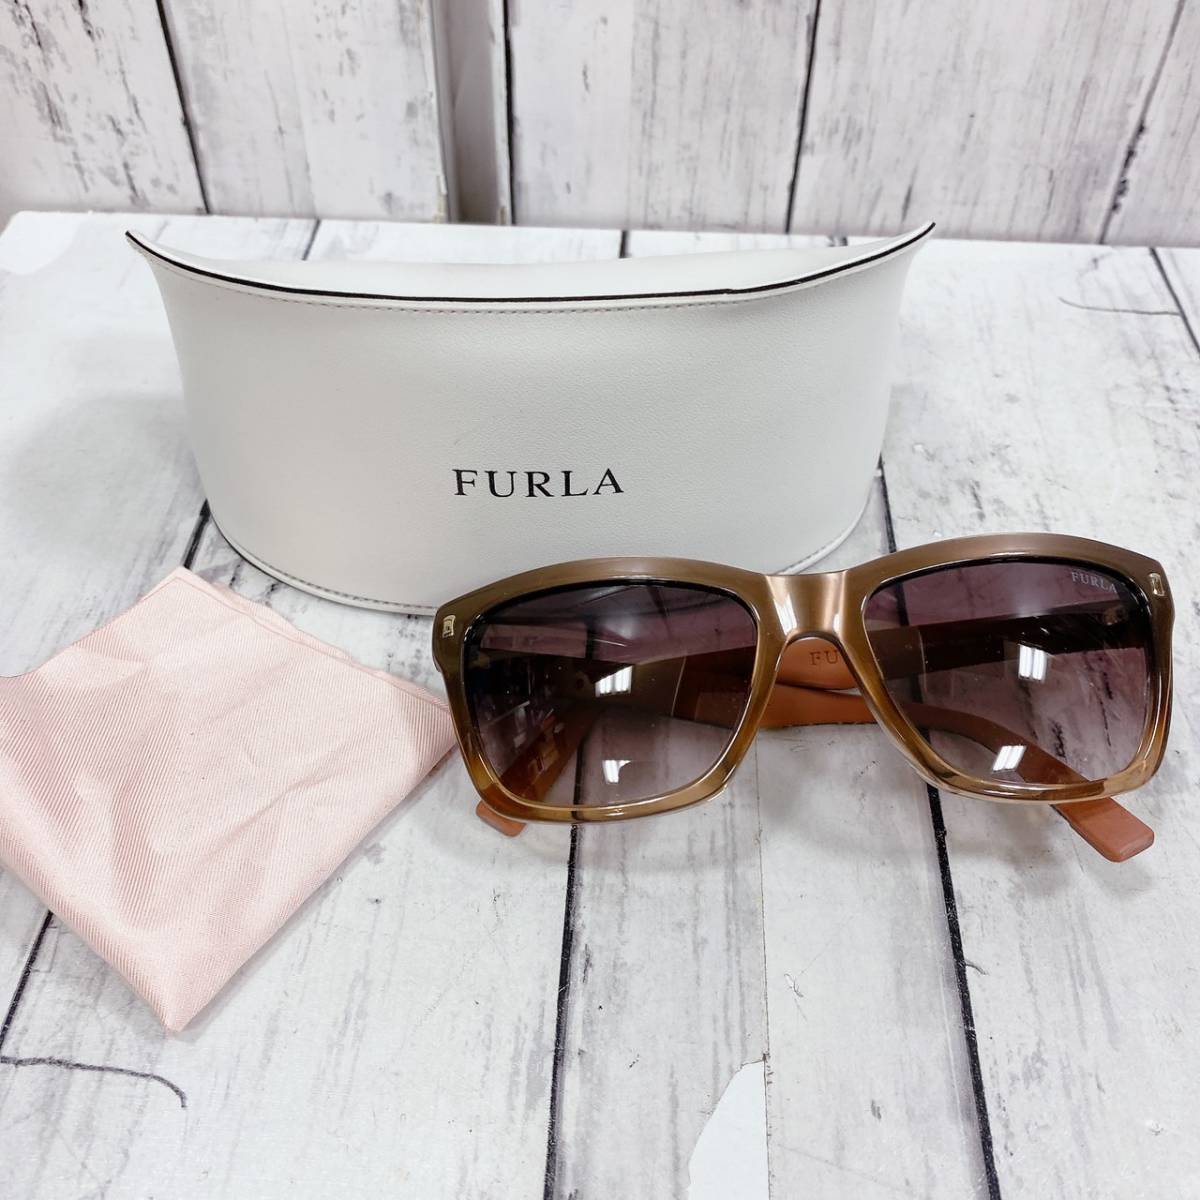  Furla FURLA sunglasses SU4835 55*18 case attaching [5720